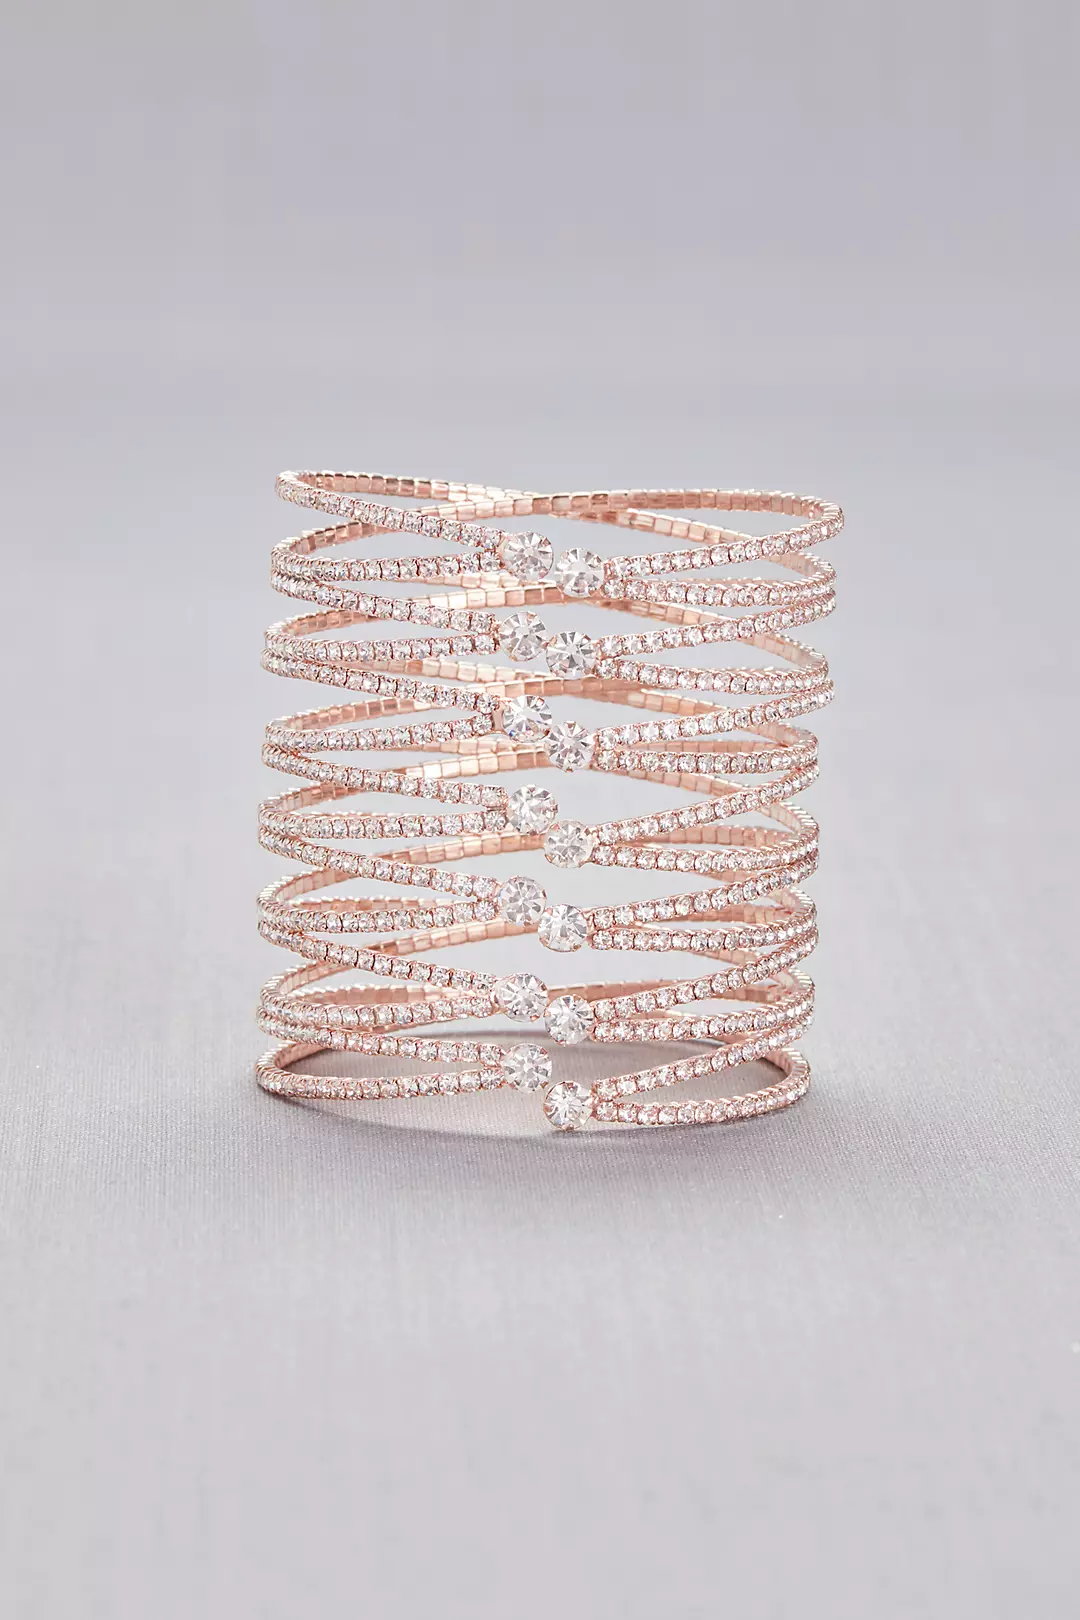 Crystal-Encrusted Overlapping Bangle Bracelet Image